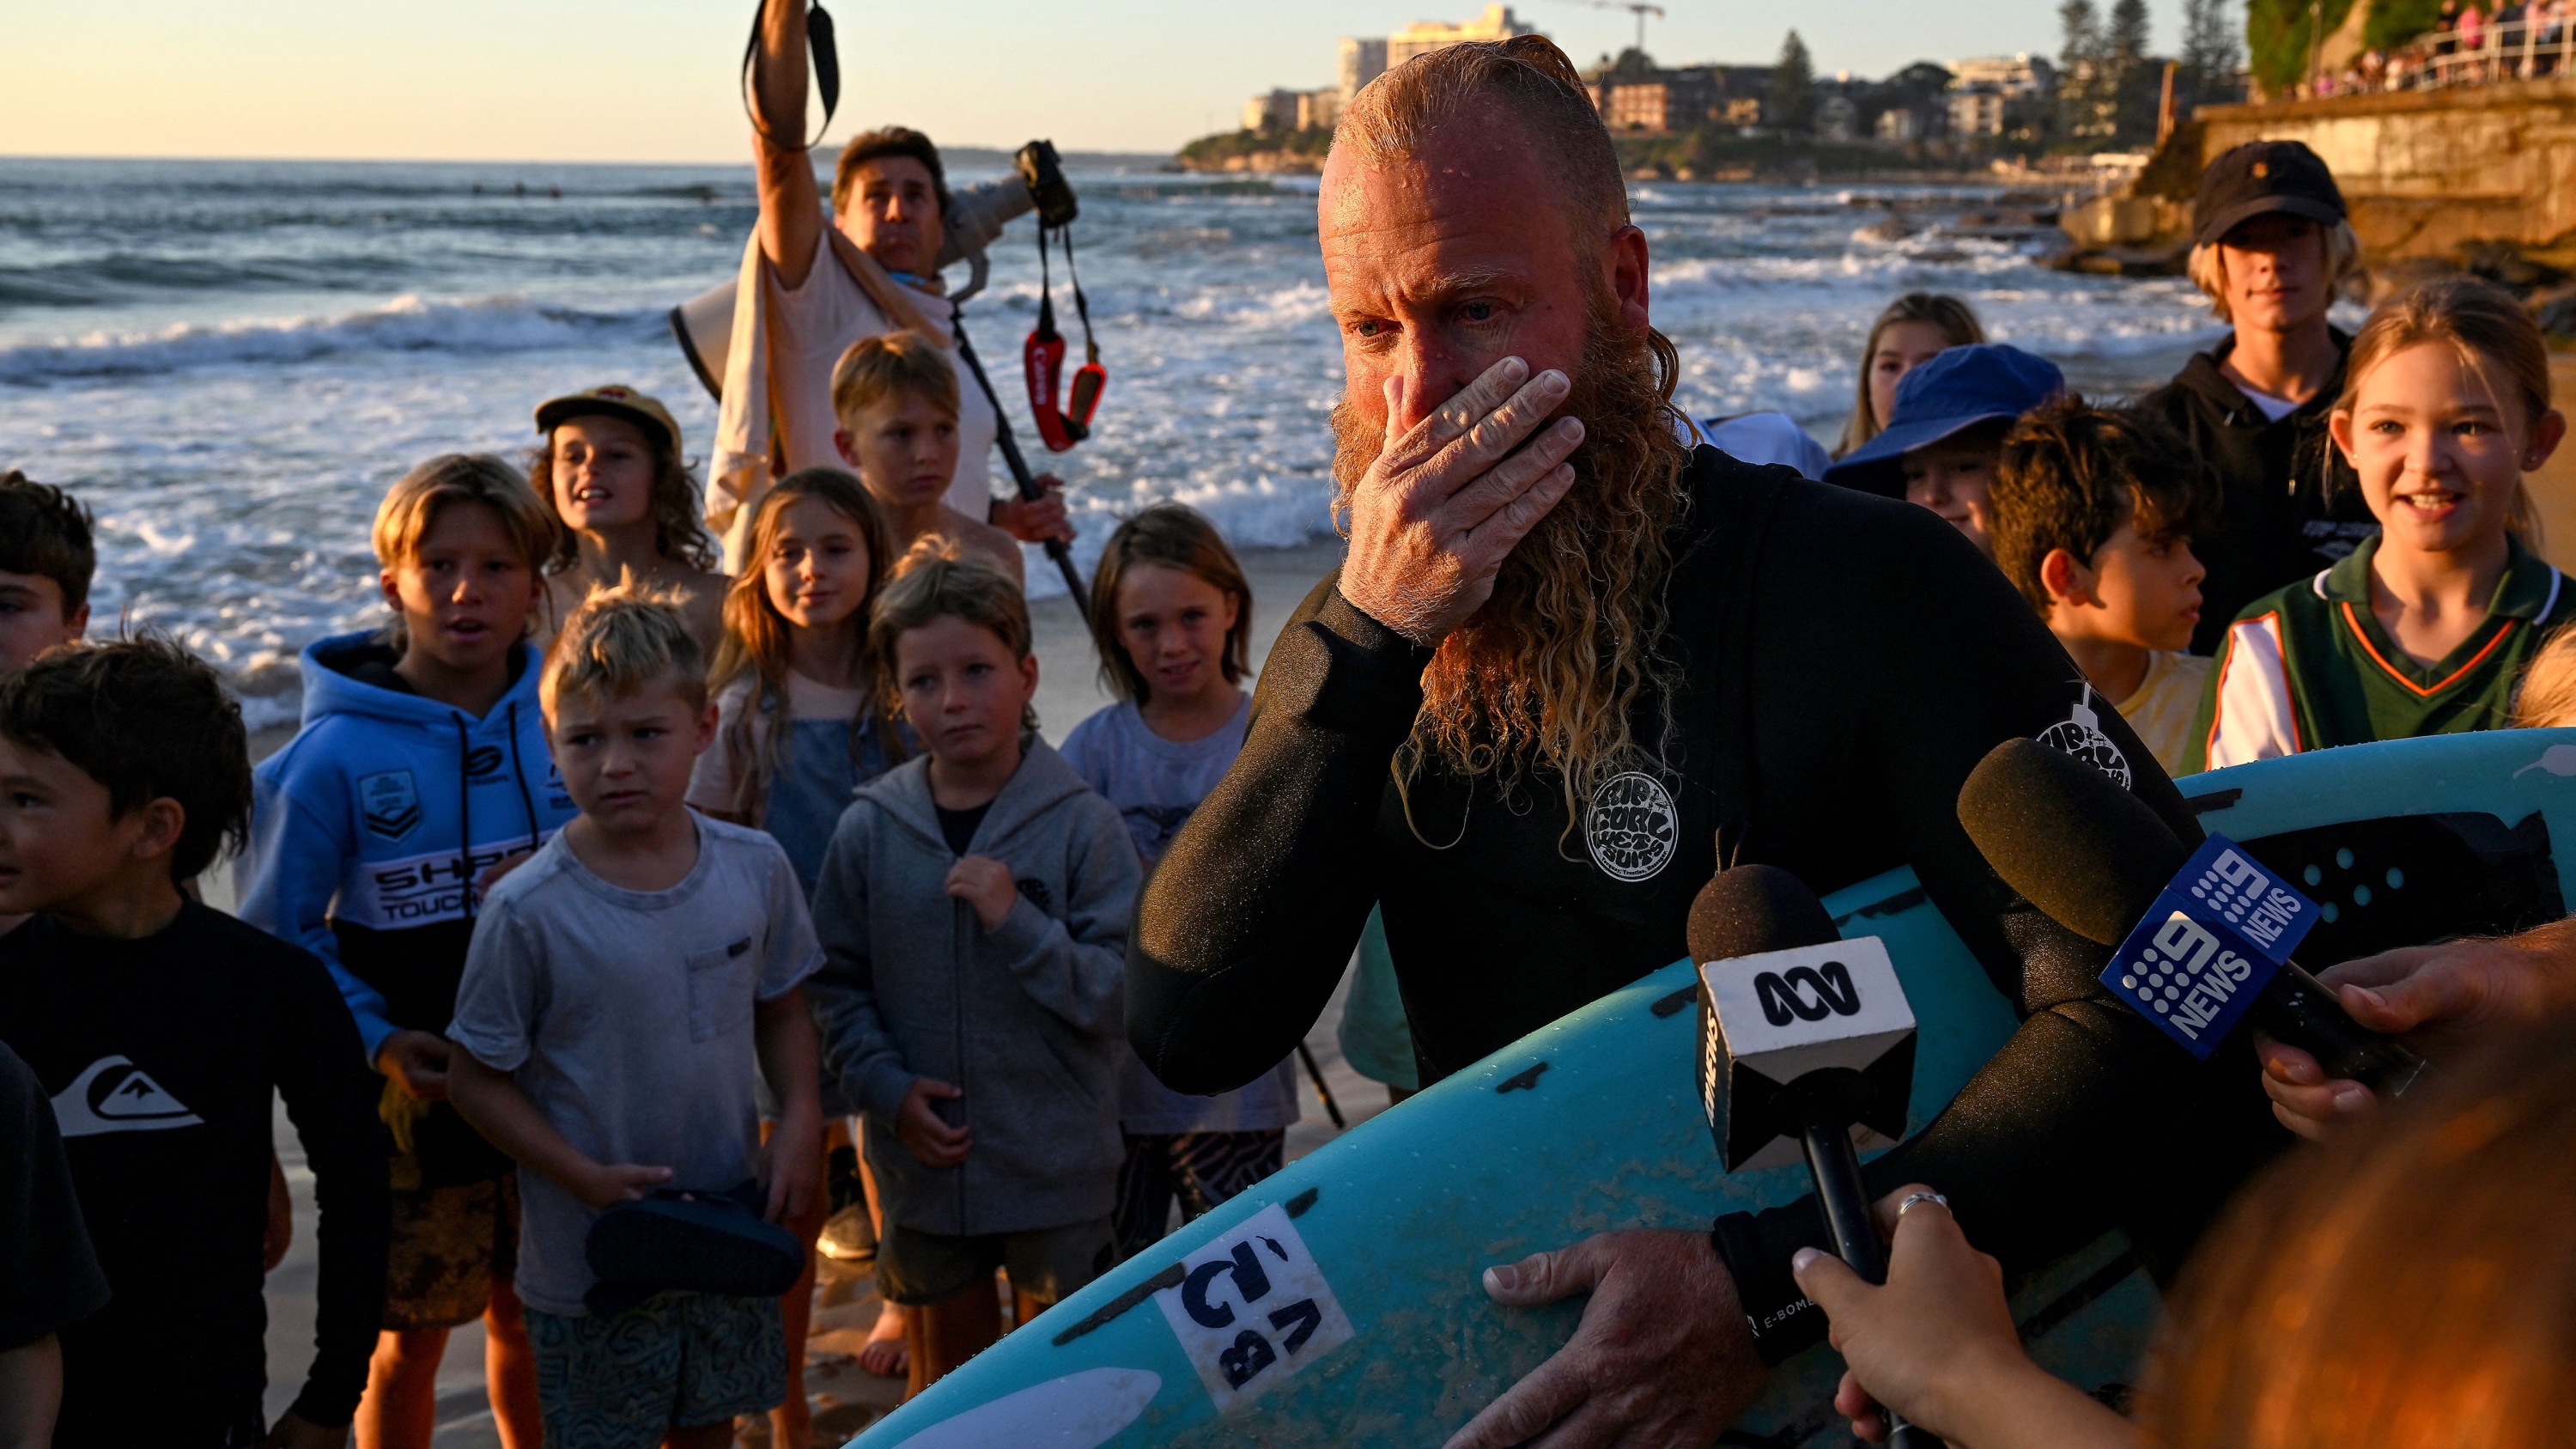 Blakey Johnston Australian surfer sets surfing world record